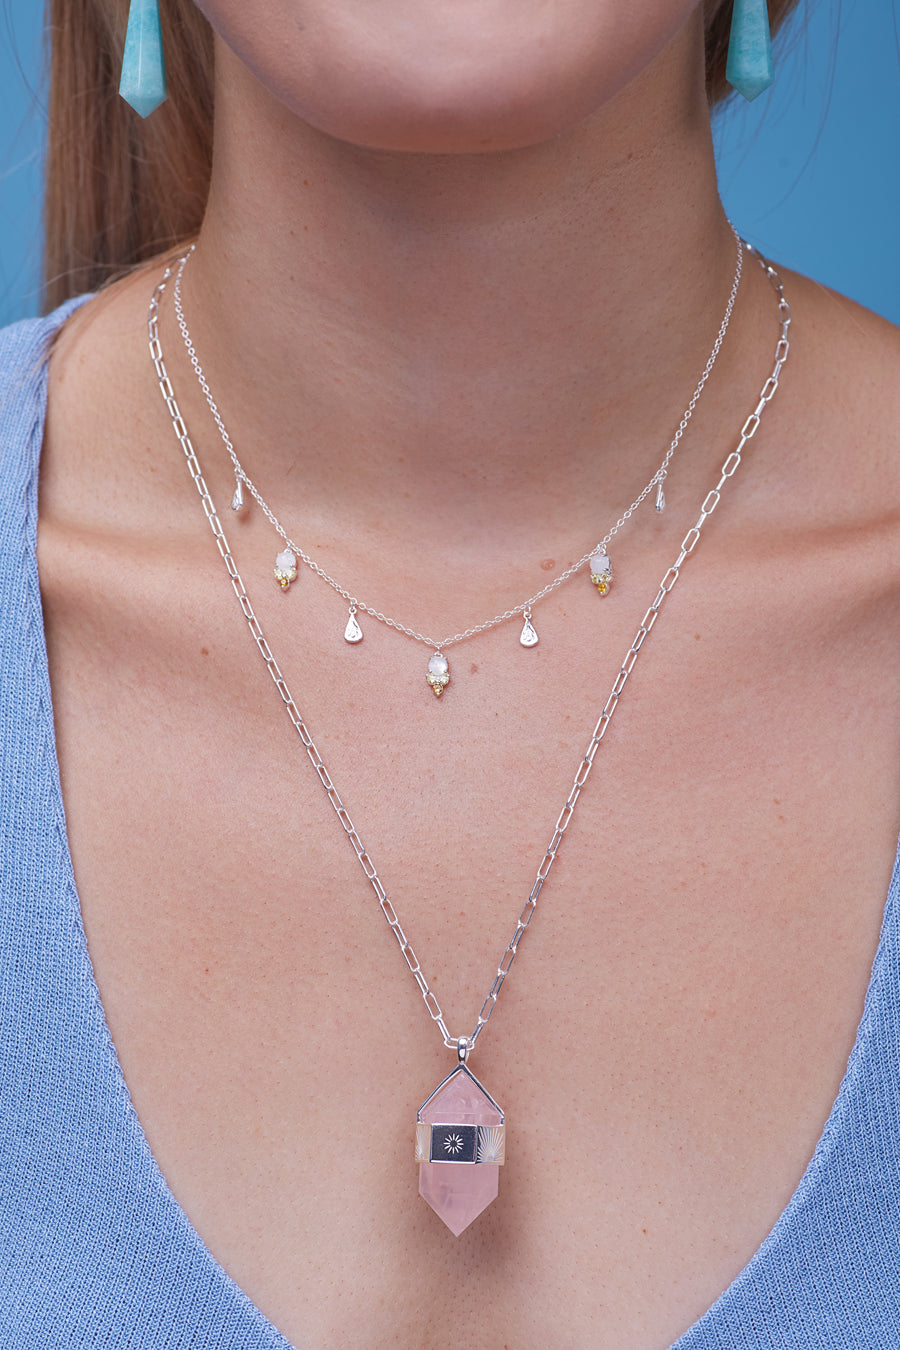 Silver Rose Quartz Pendulum Necklace being worn